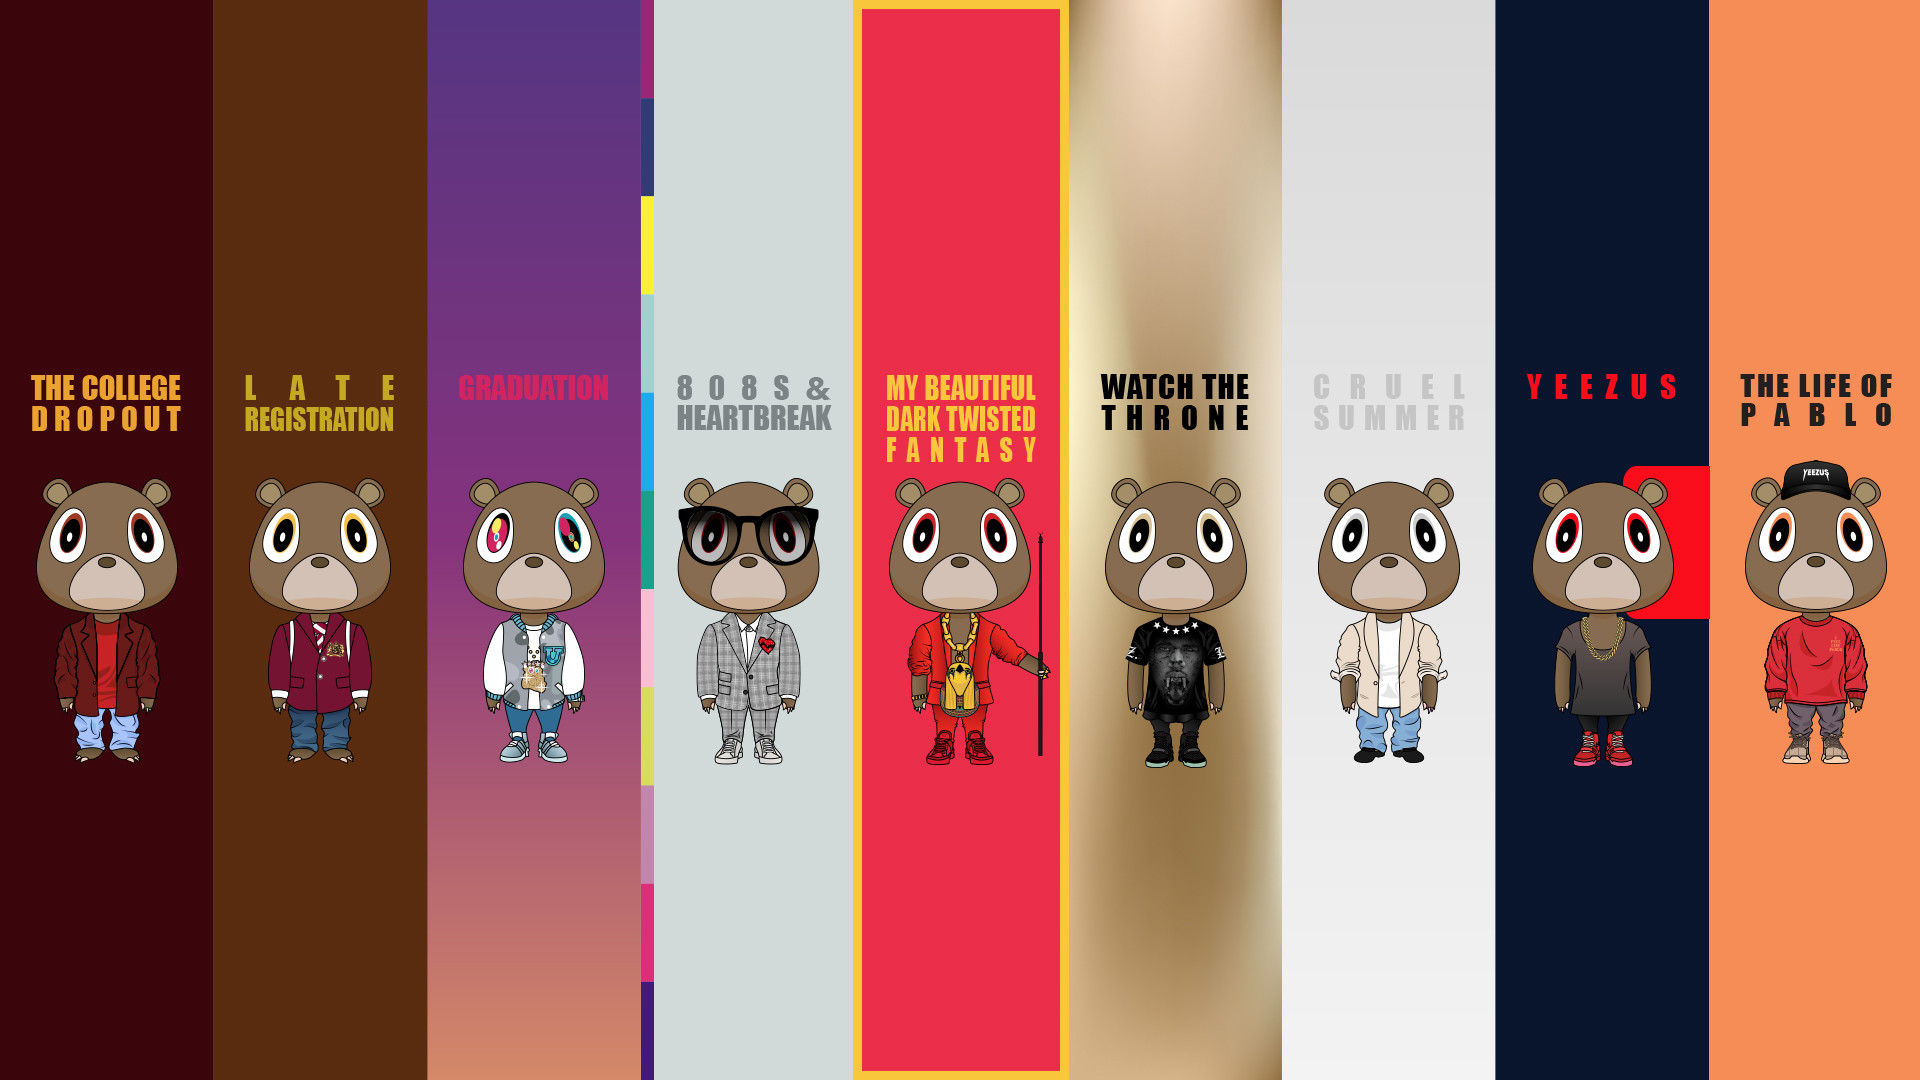 Kanye West Graduation Wallpaper ·① WallpaperTag